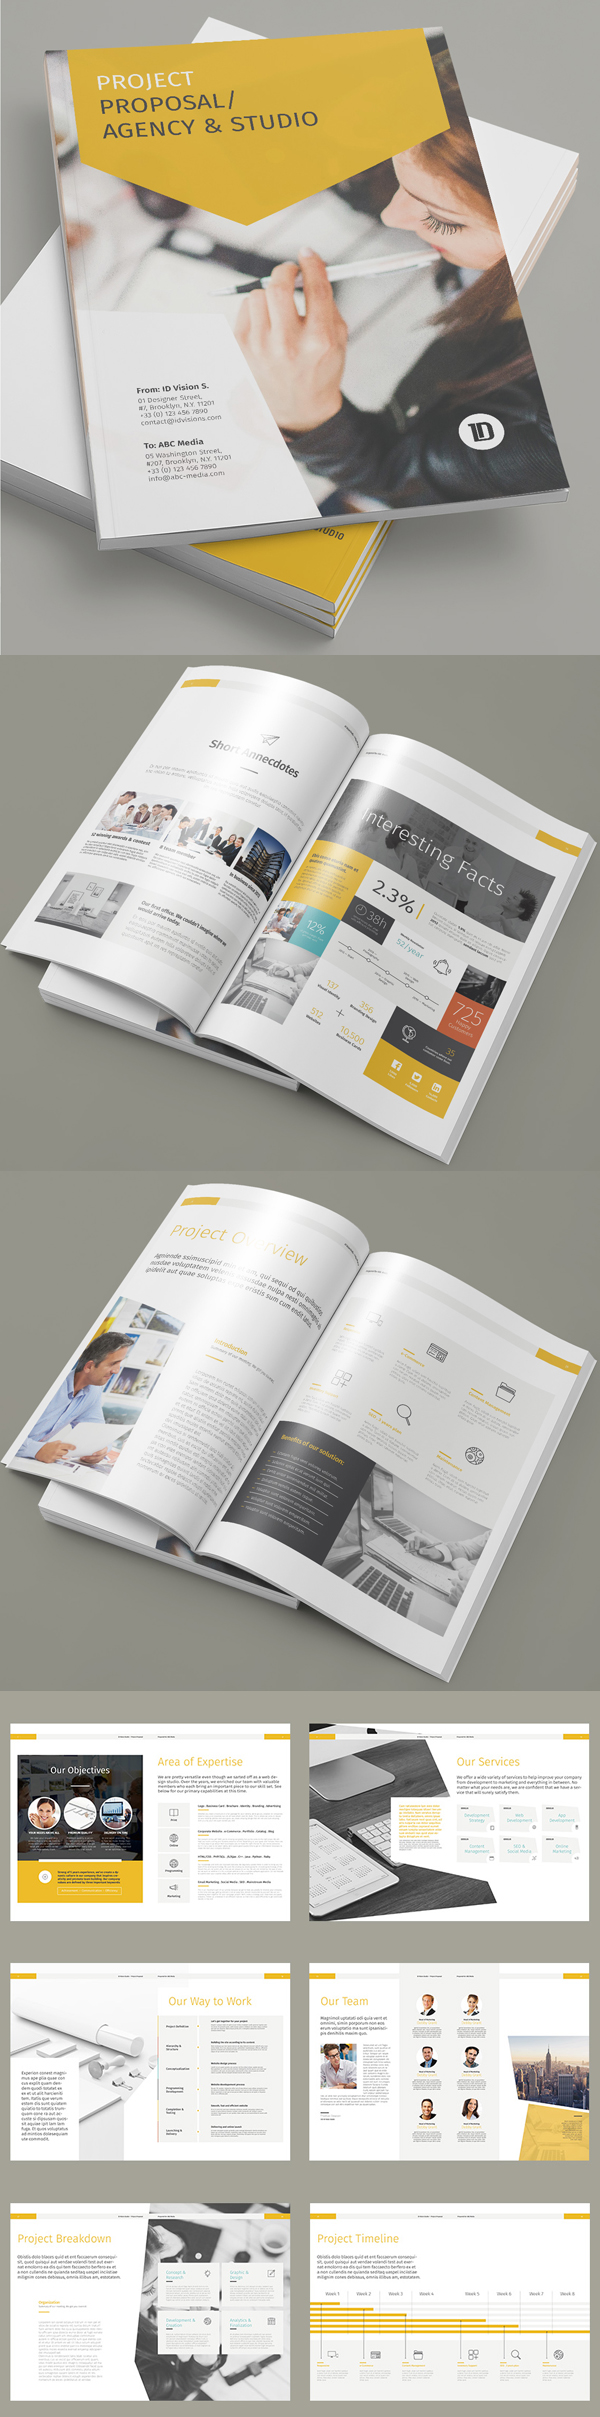 100 Professional Corporate Brochure Templates - 13